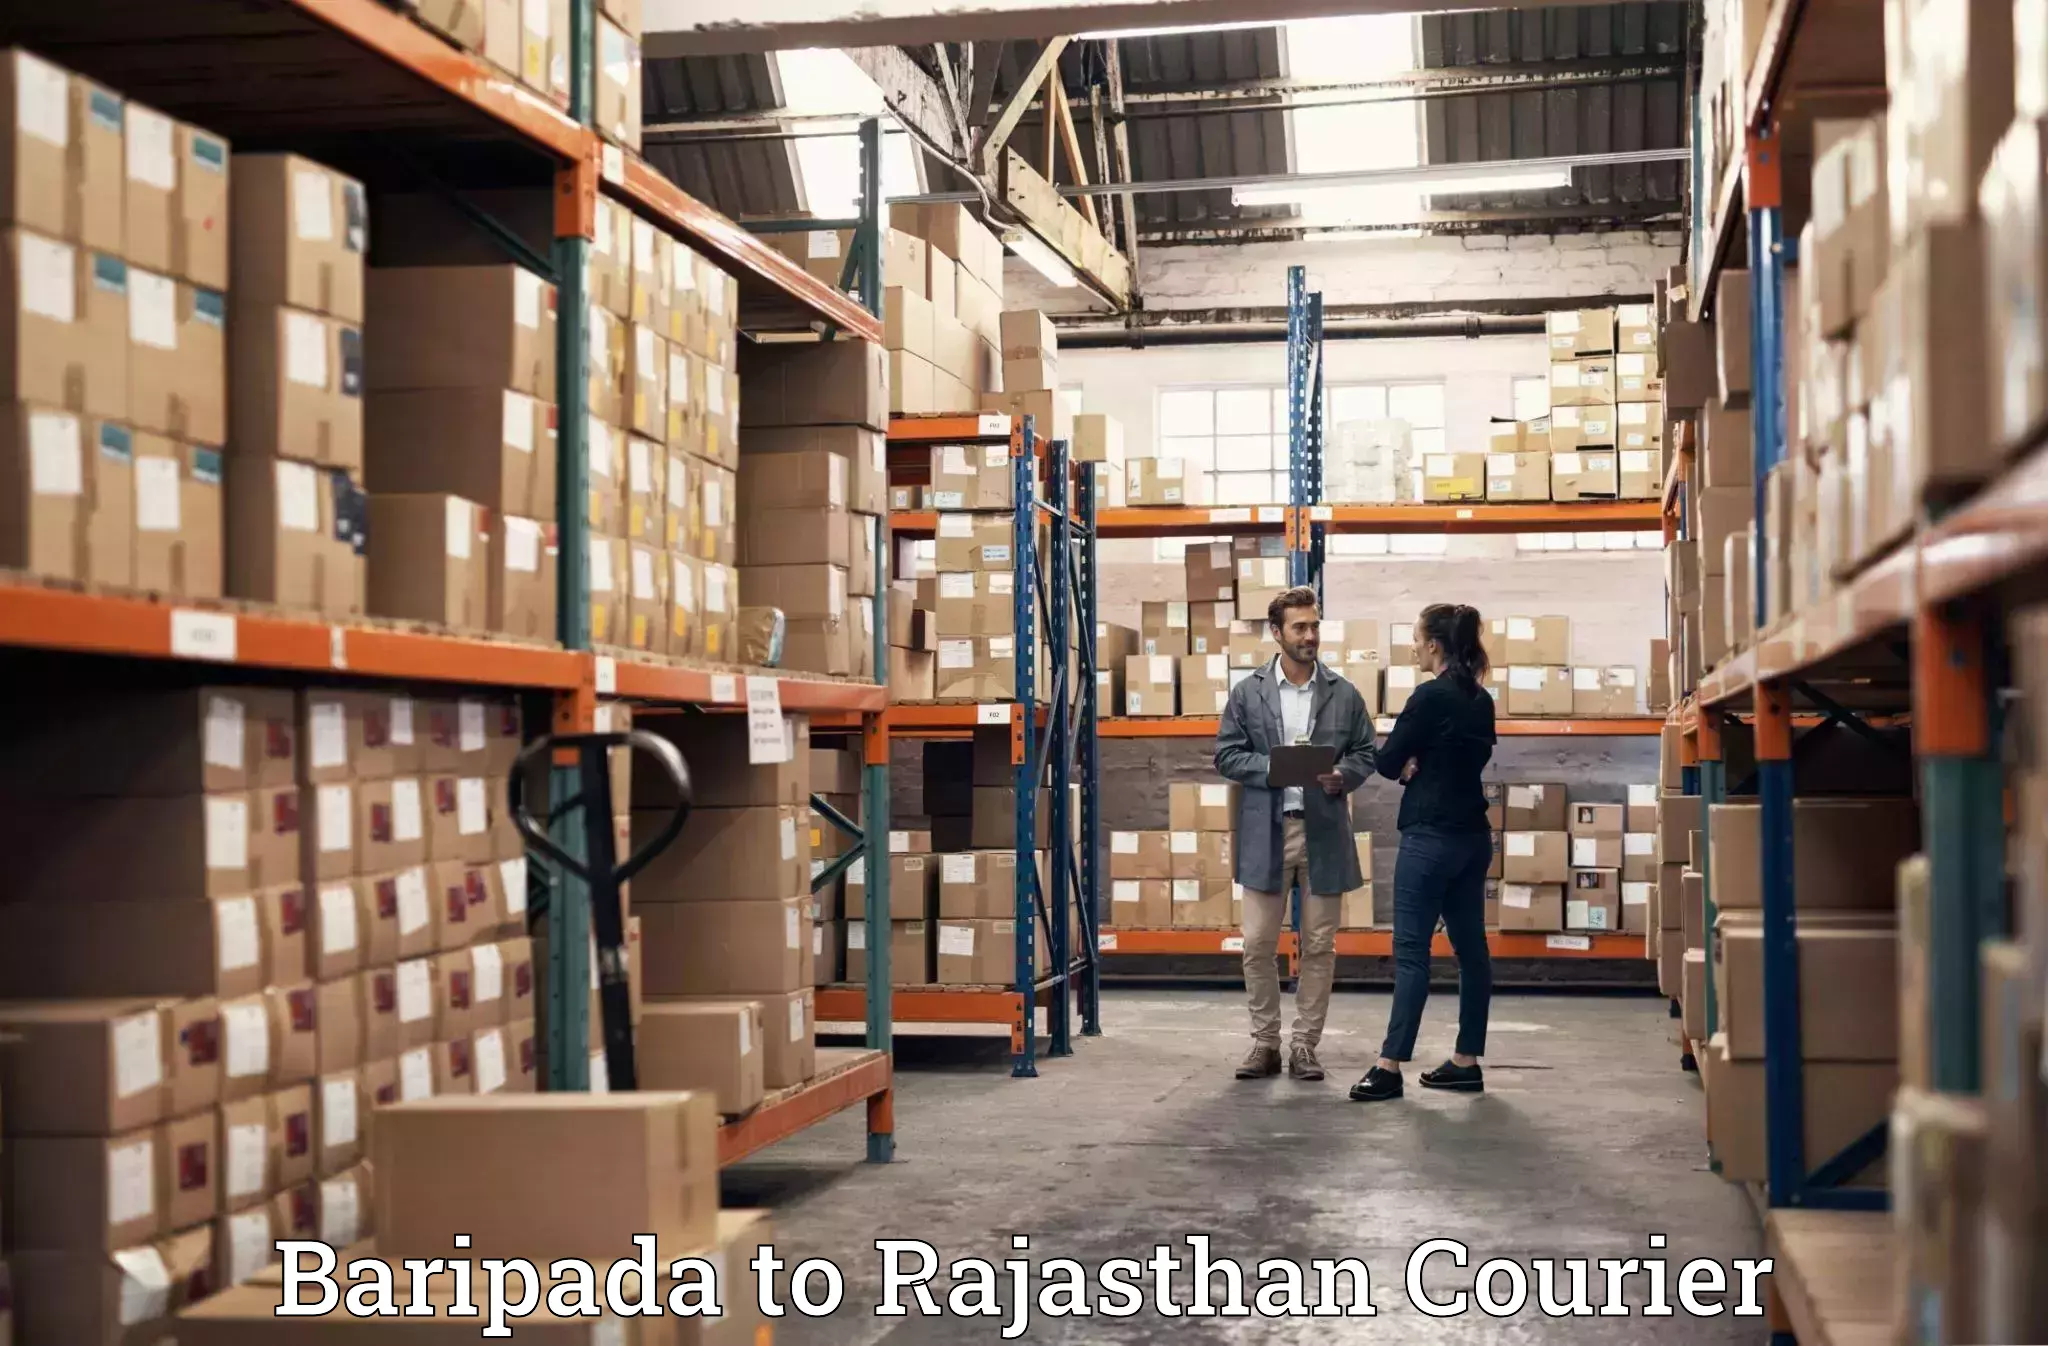 Professional moving company Baripada to Mathania